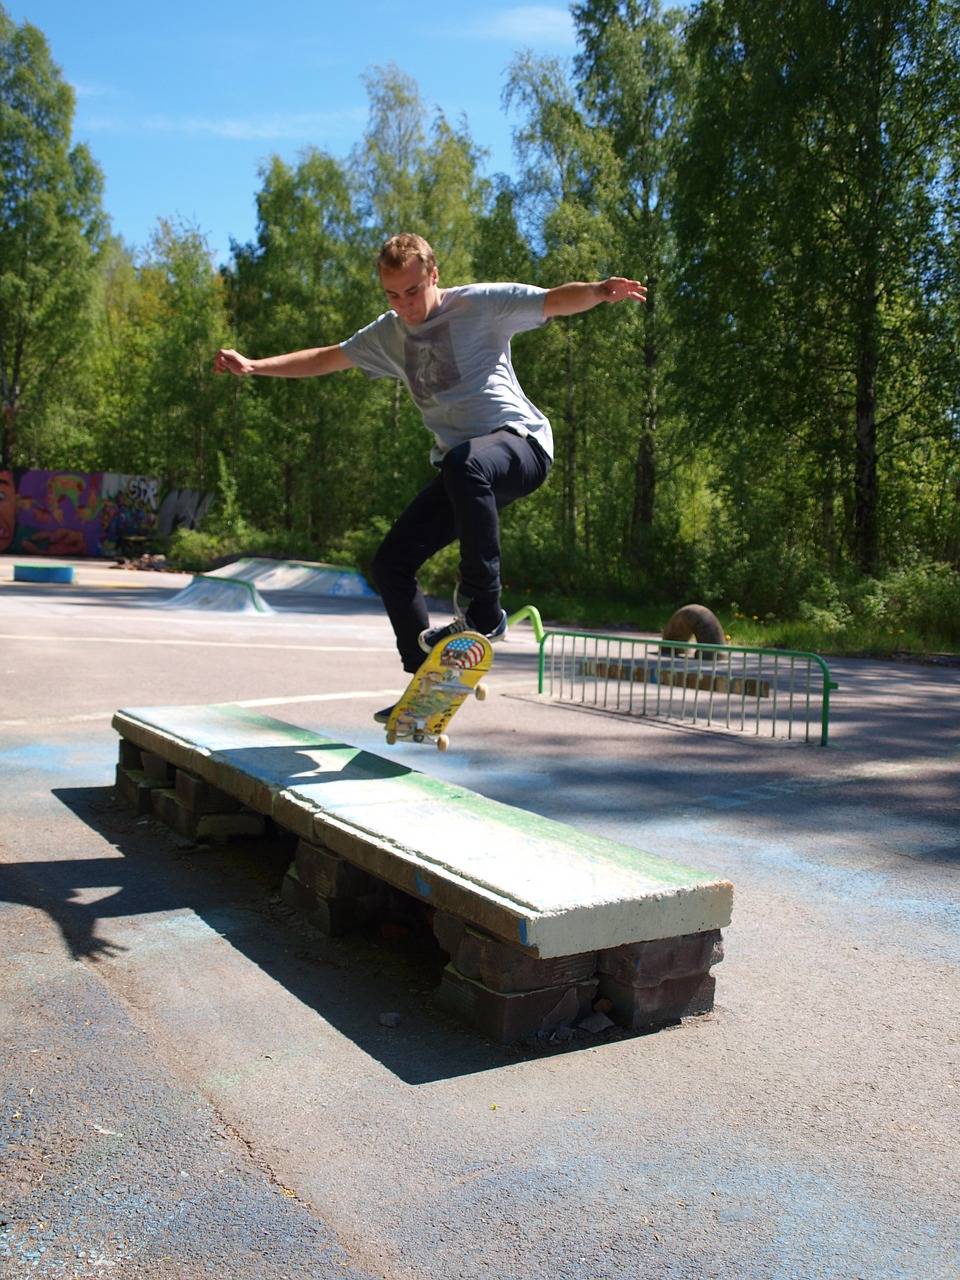 skate board sports free photo